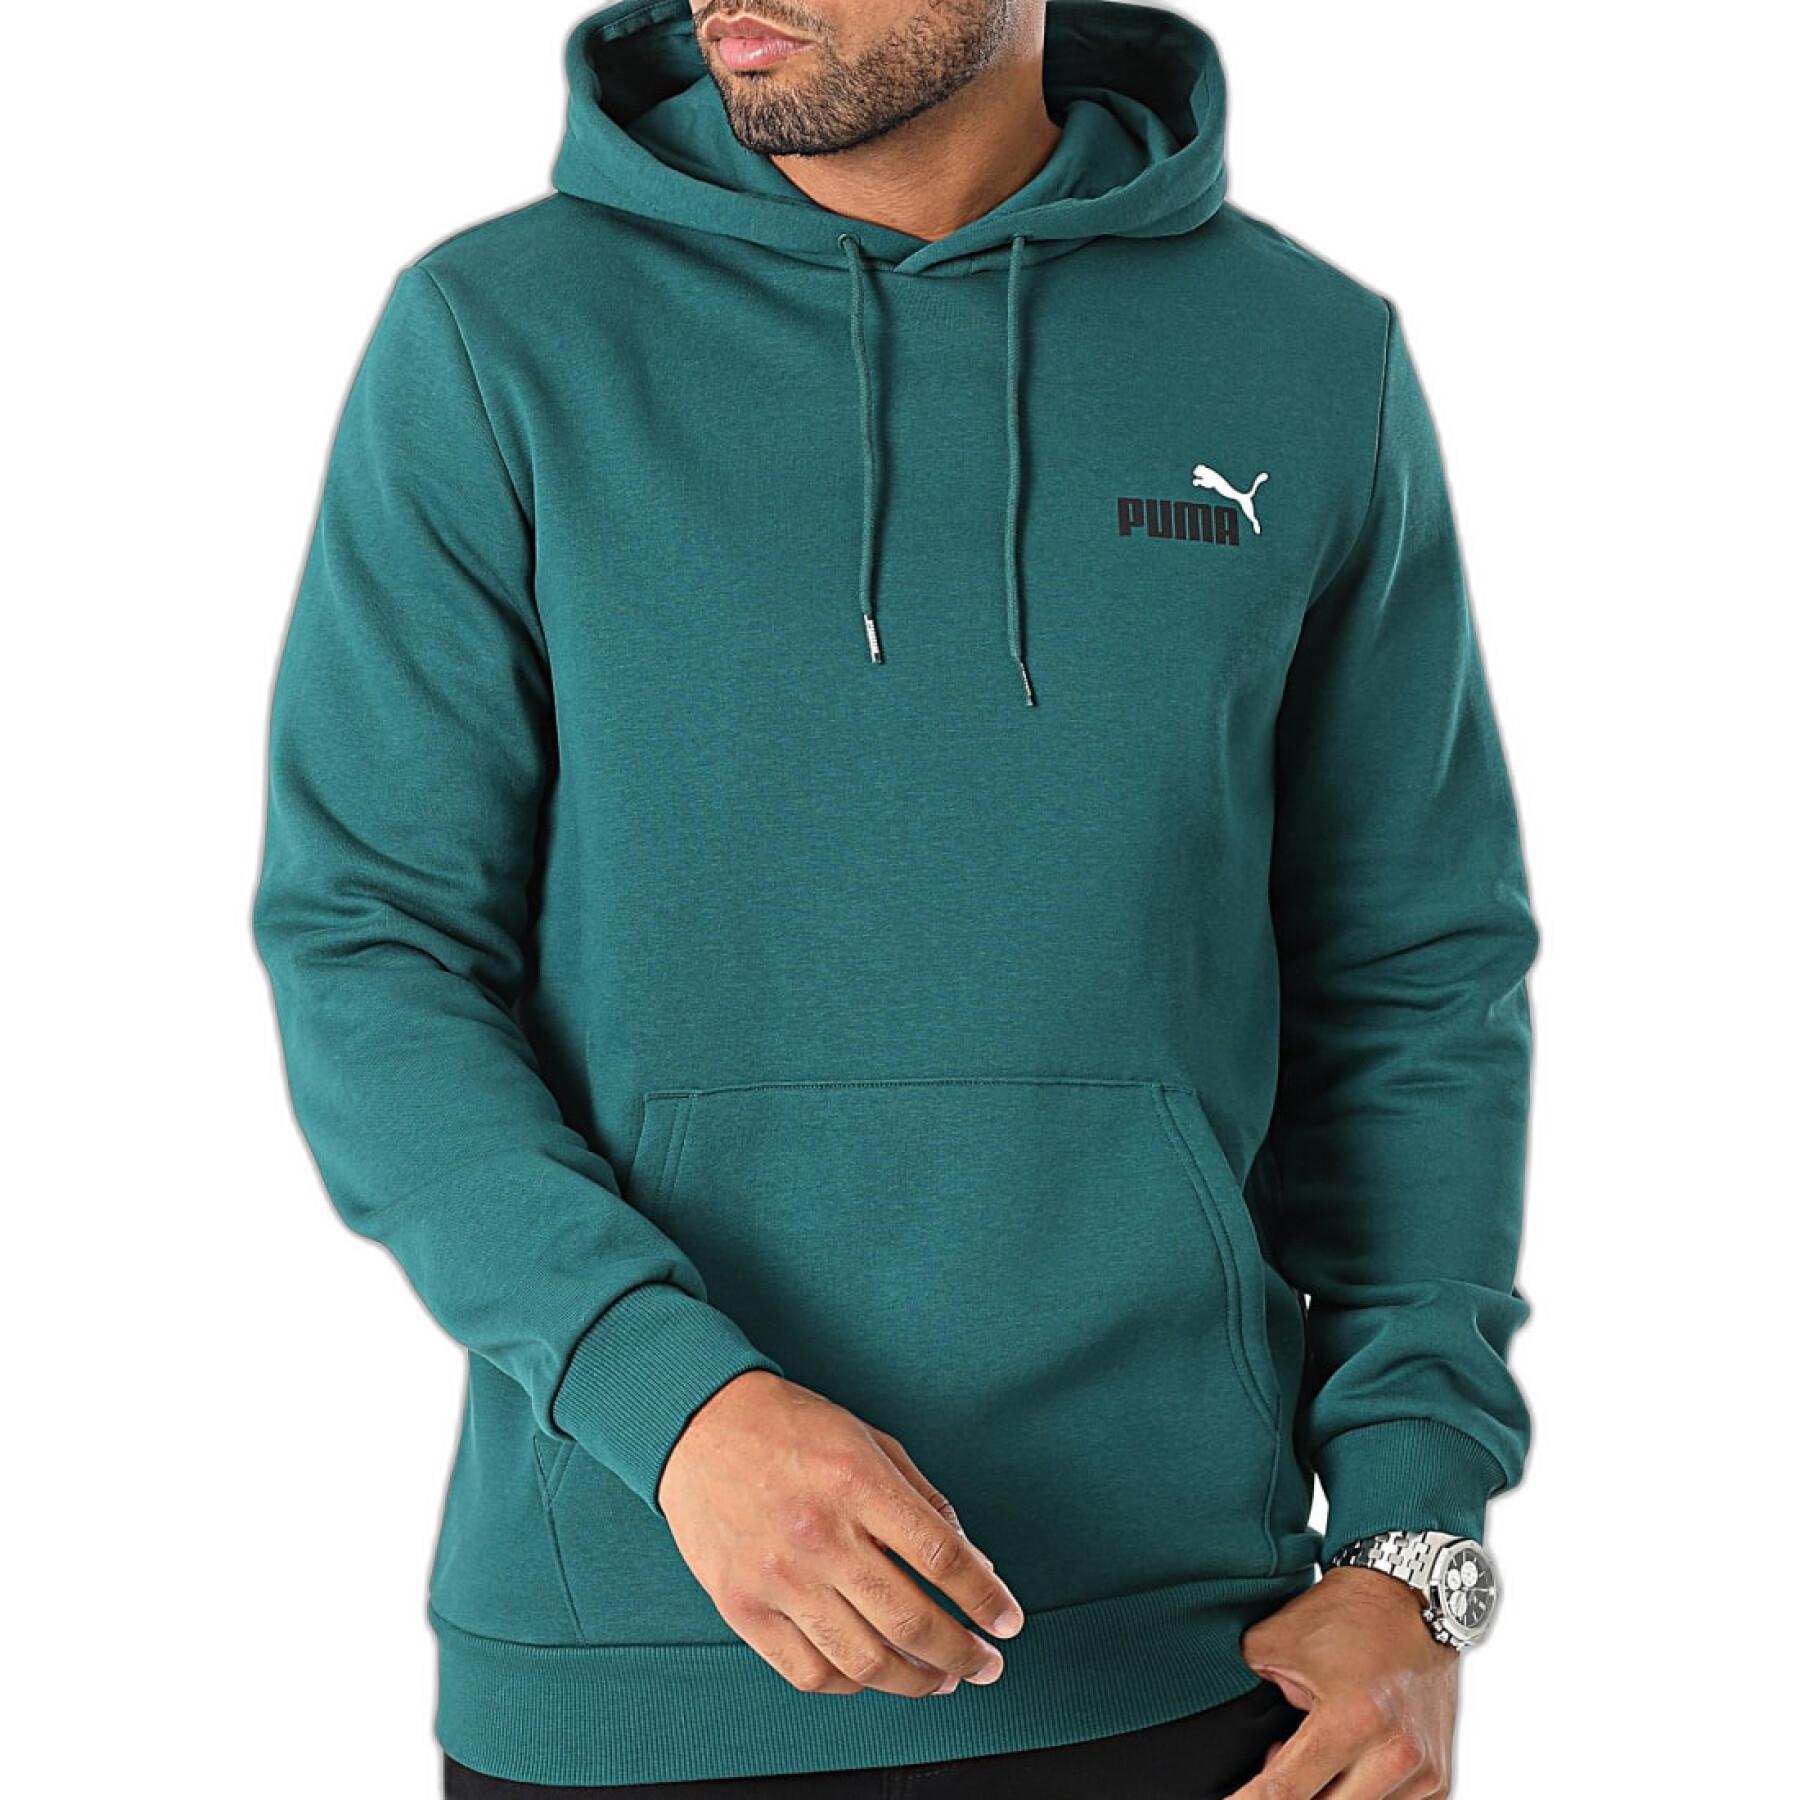 Lifestyle Hoodie Male - Lifestyle Col 2 - Puma Logo Small - Essential FL + Sweatshirts